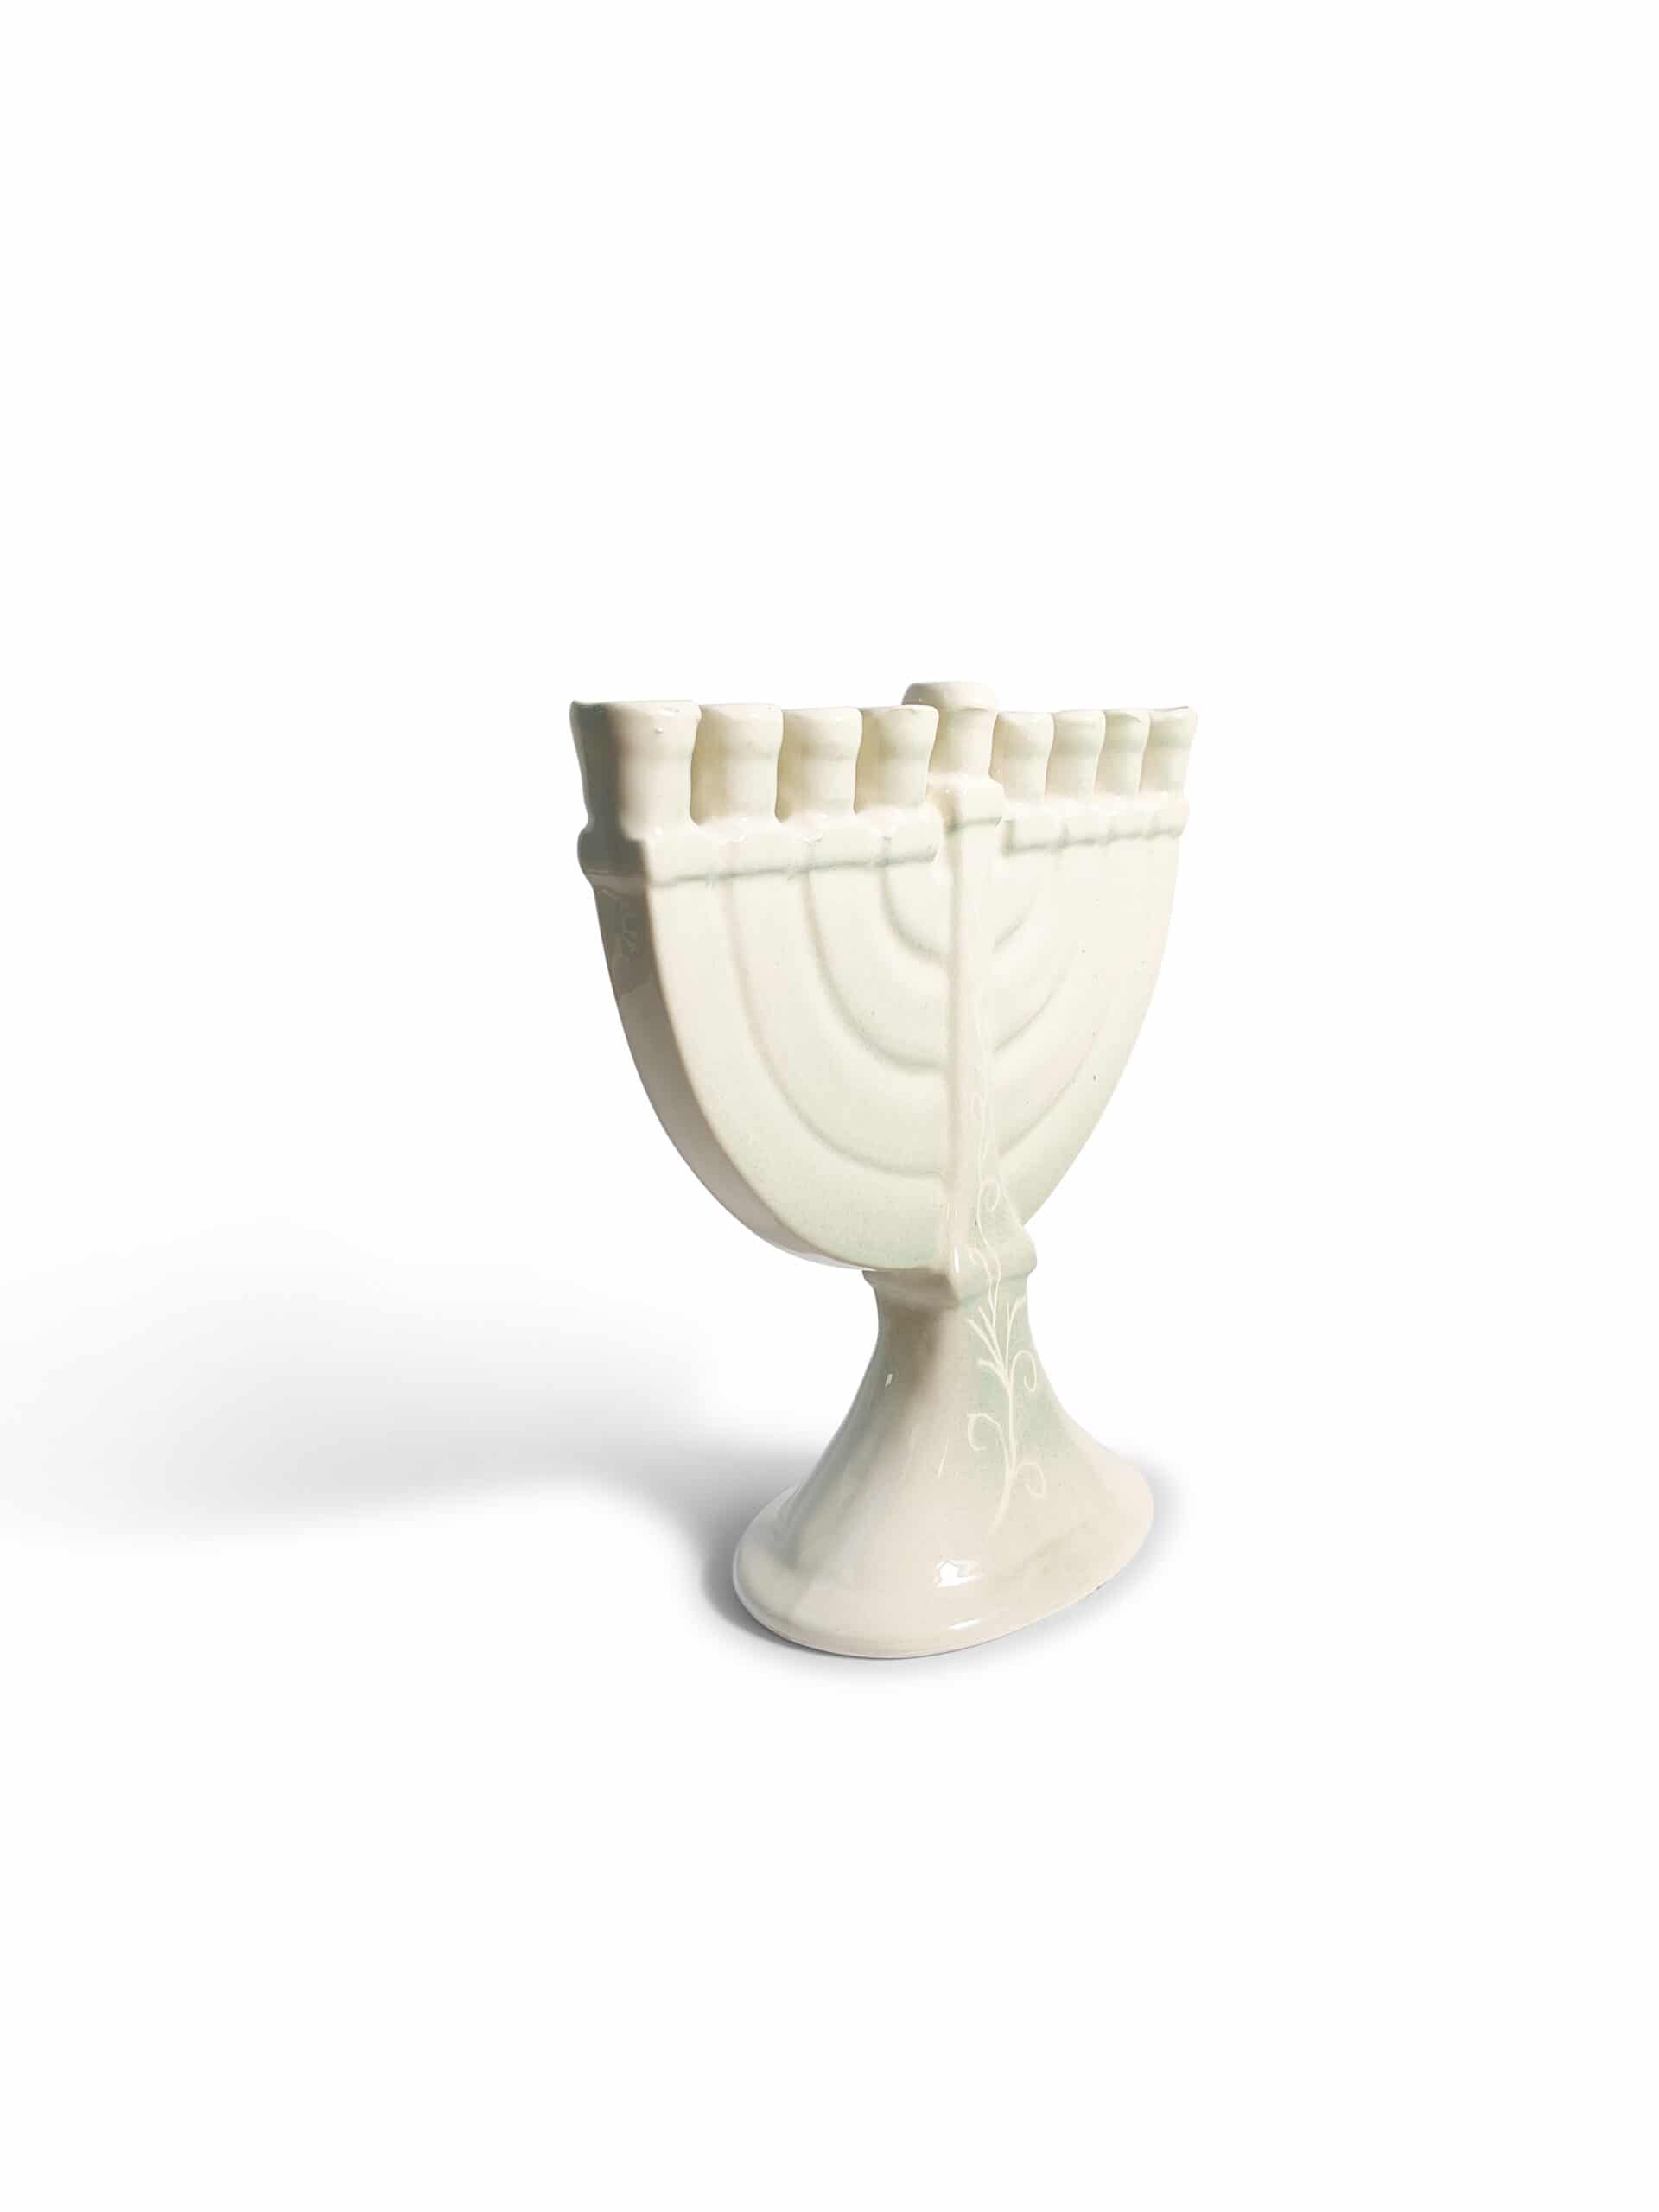 Traditional Handmade Cream Ceramic Hanukkah Menorah